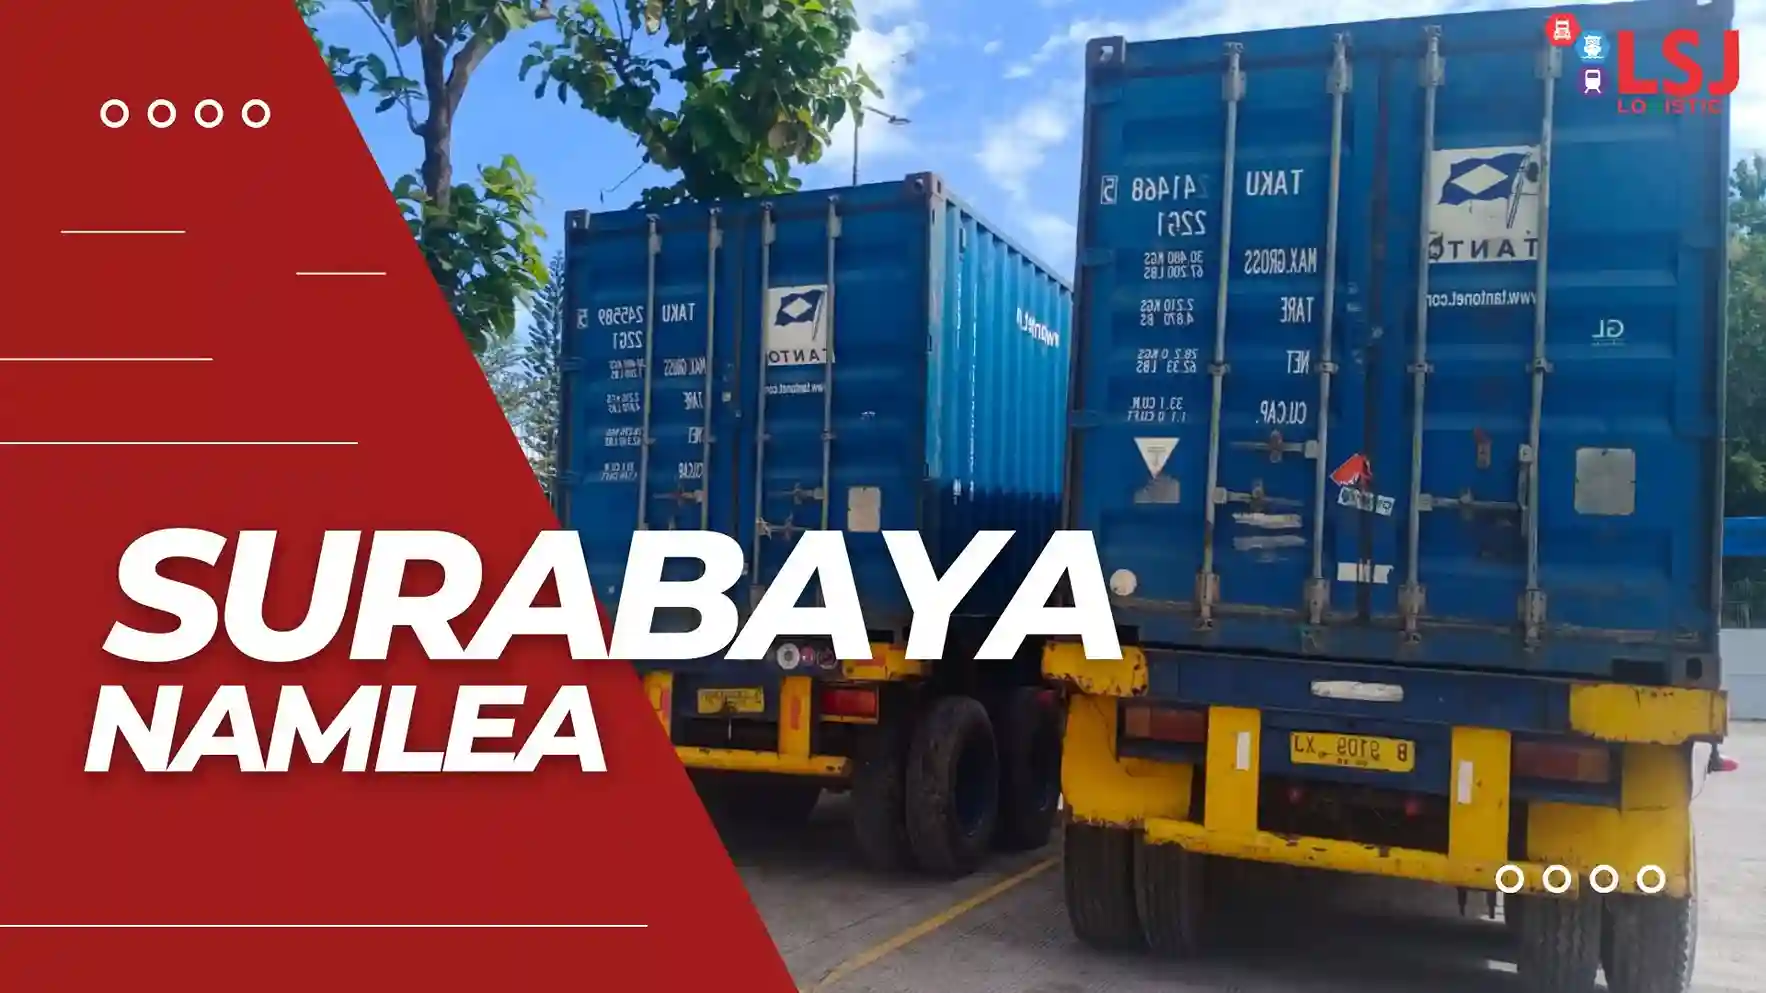 Tarif Pengiriman Container Surabaya Namlea